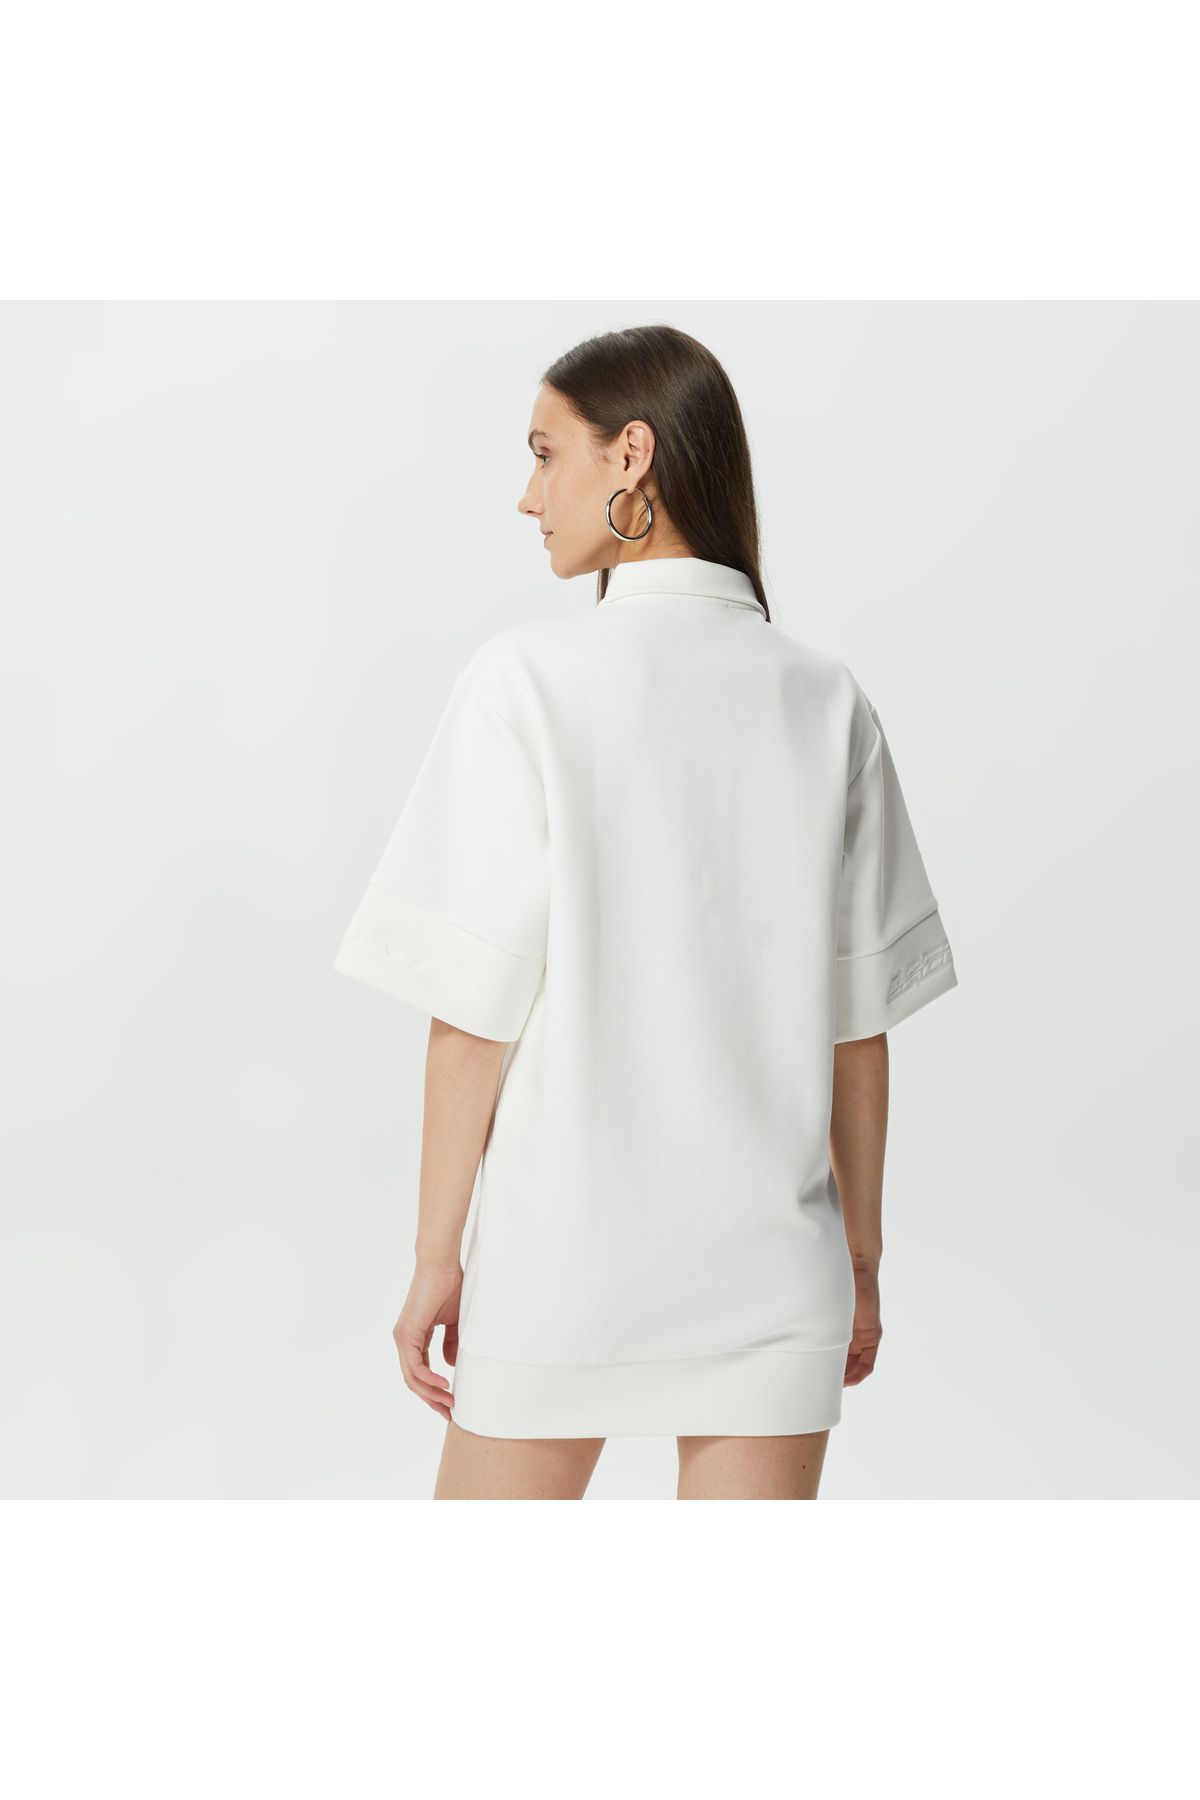 Lacoste لباس سفید آستین کوتاه و یاکا